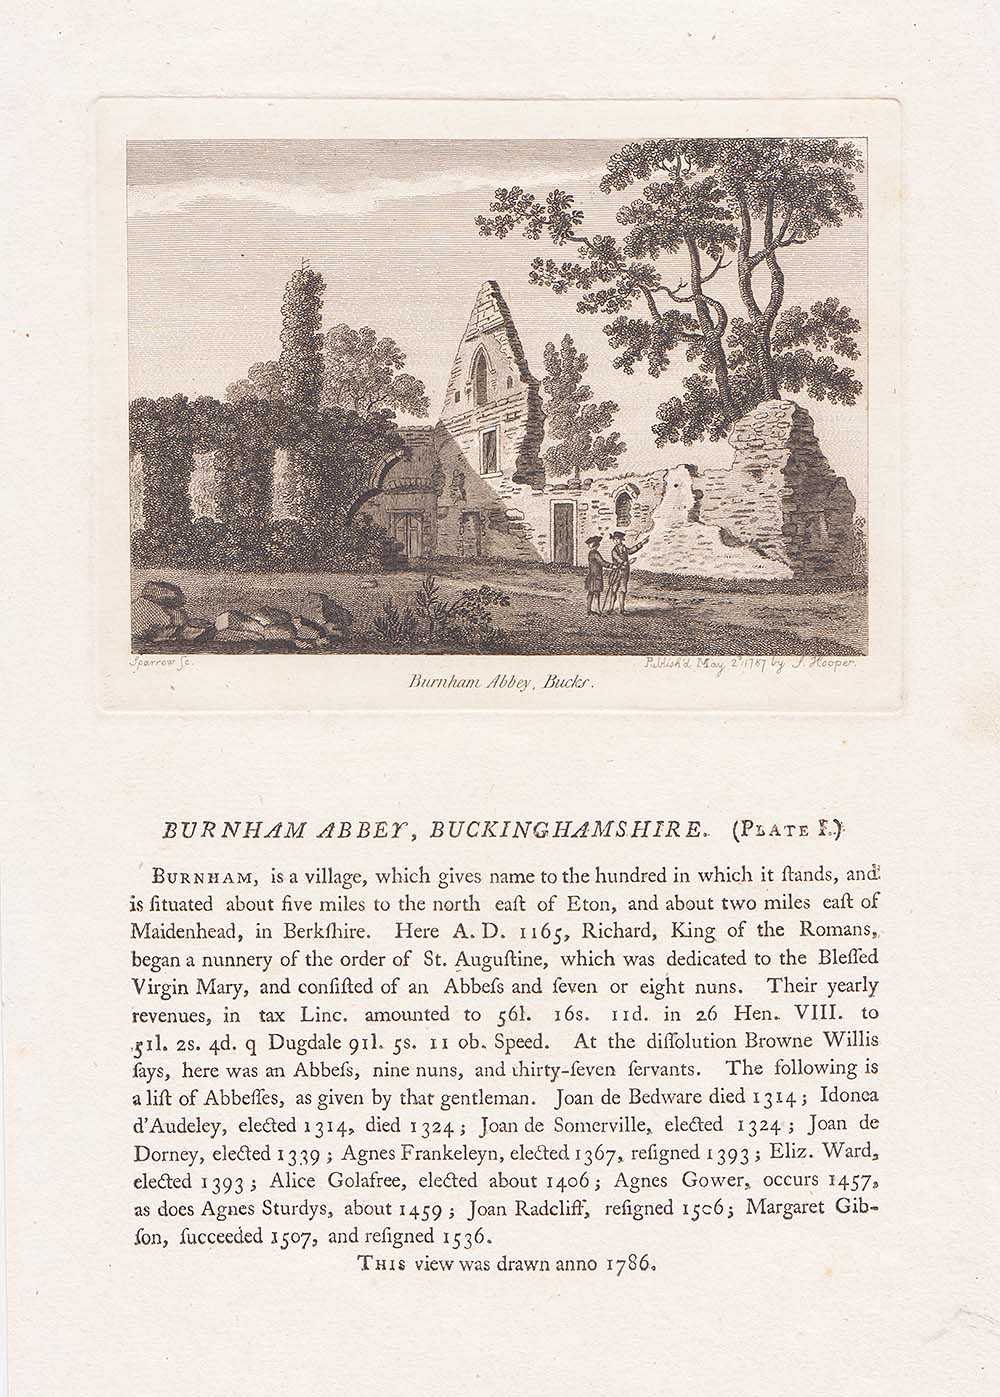 Burnham Abbey Buckinghamshire Plate 1 